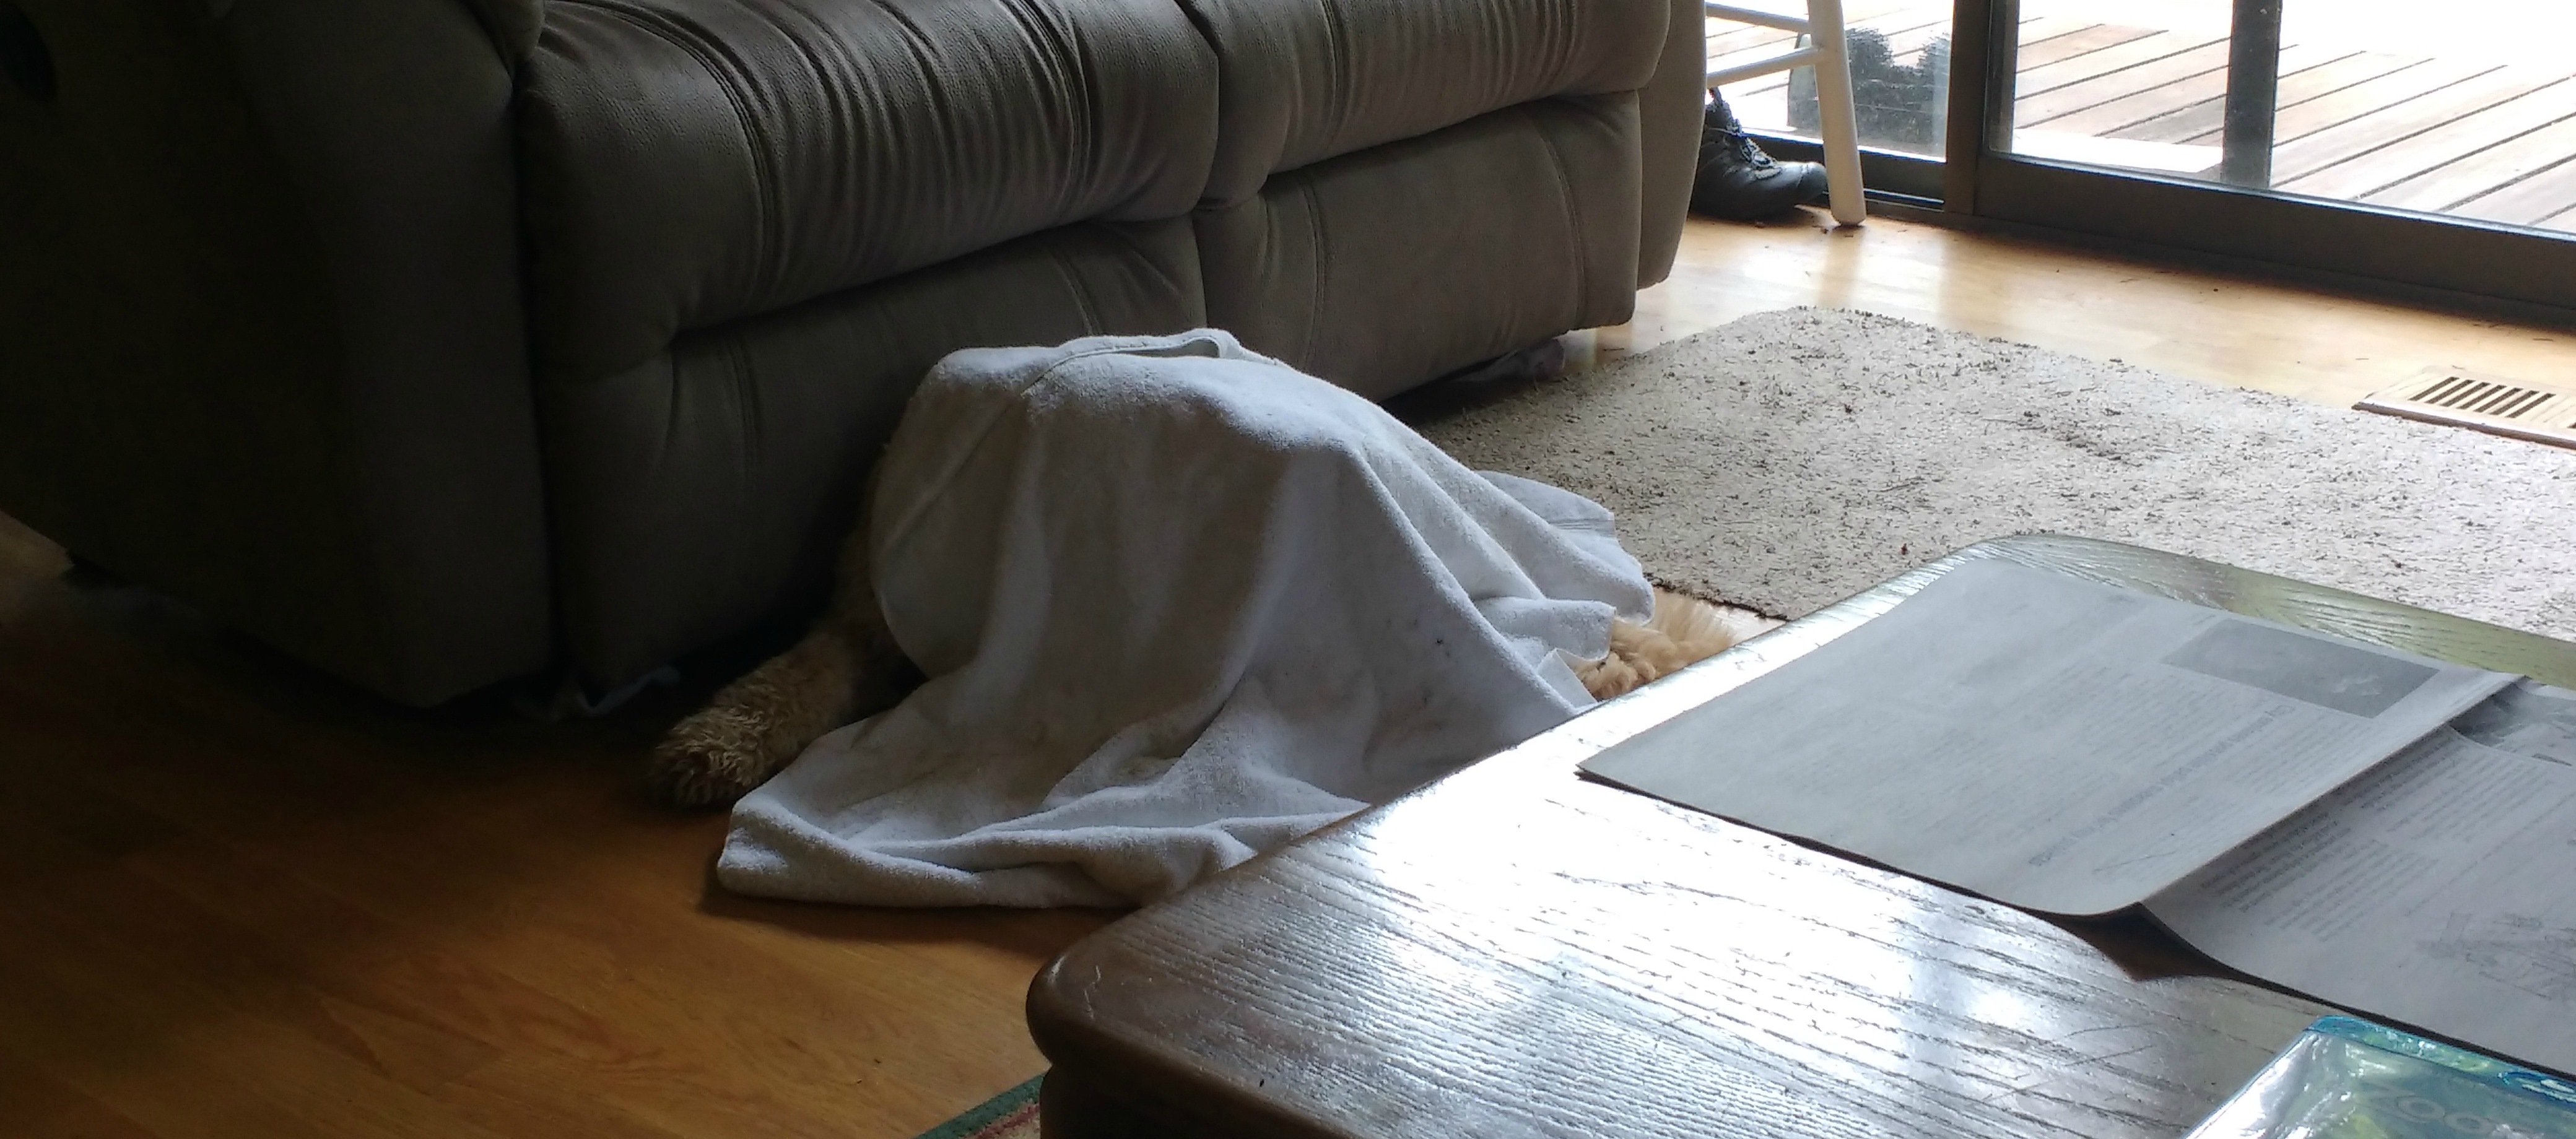 Hachi under a dog towel.